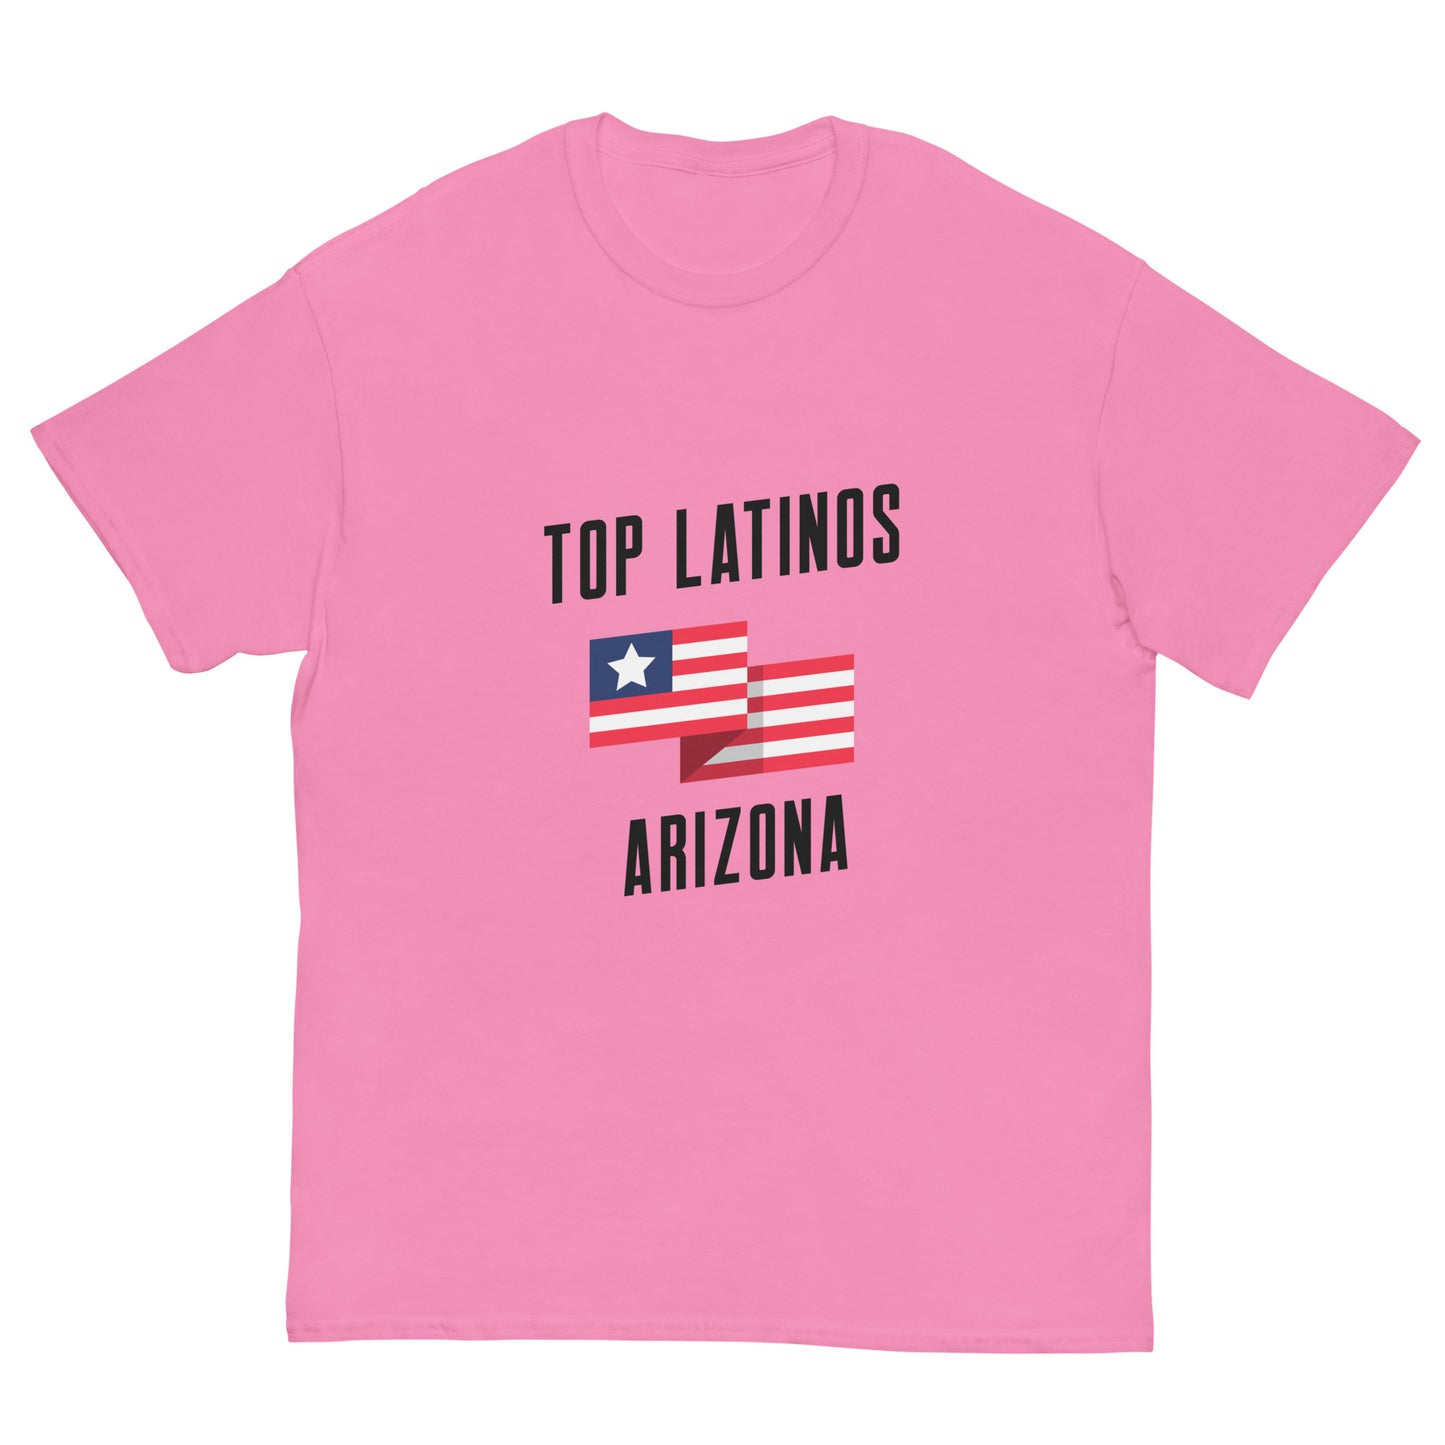 Top Latinos Arizona classic tee